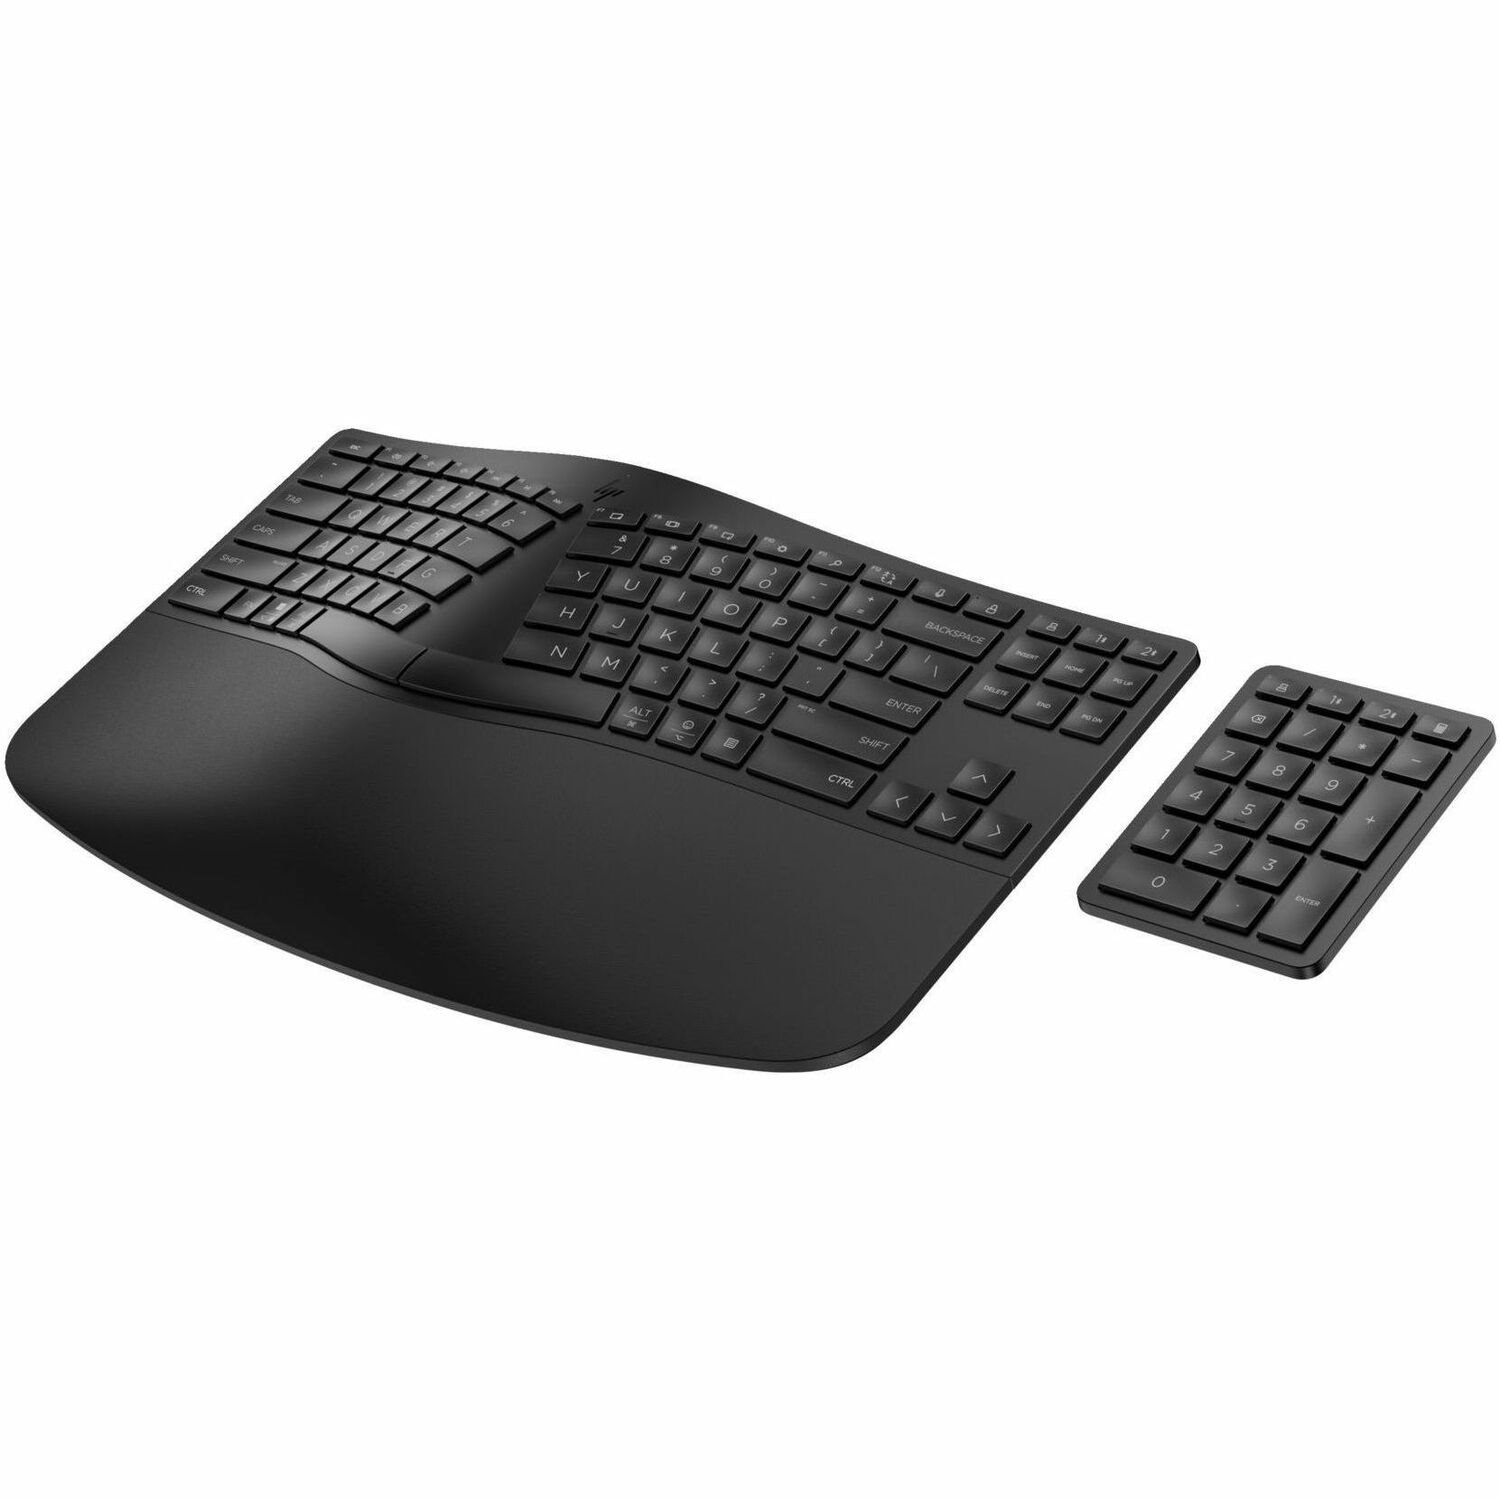 HP 960 Keyboard - Wireless Connectivity - USB Type A Interface - Black